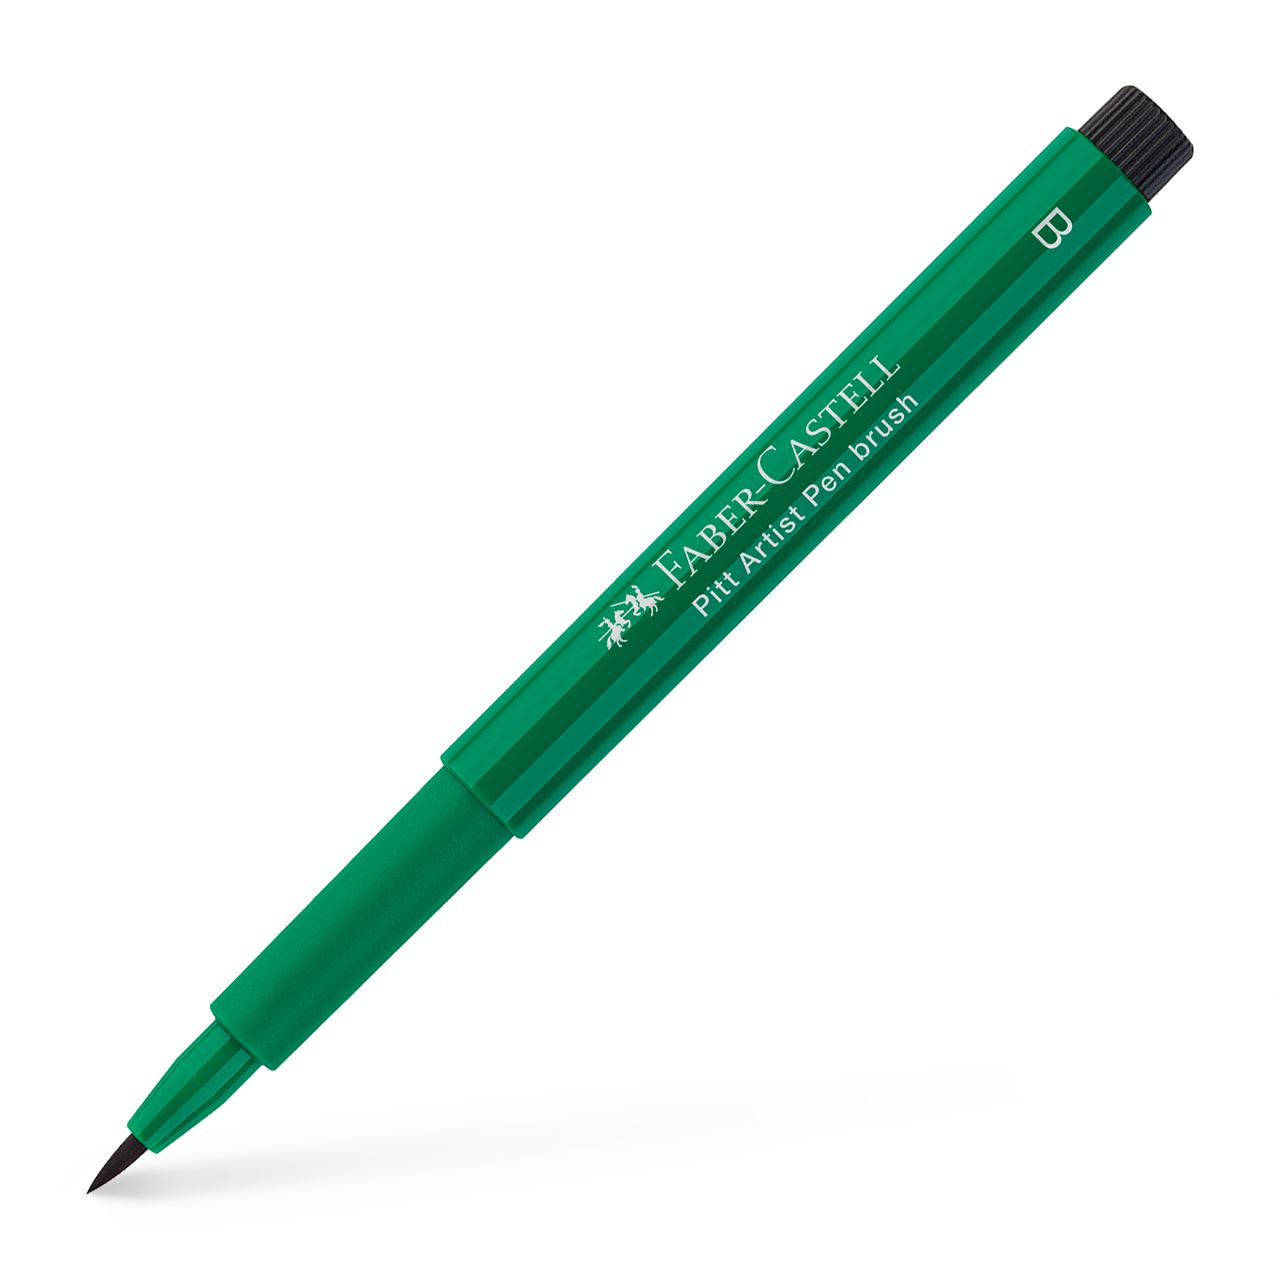 Faber-Castell - Rotulador Pitt Artist Pen Brush, verde ptalocianina oscuro